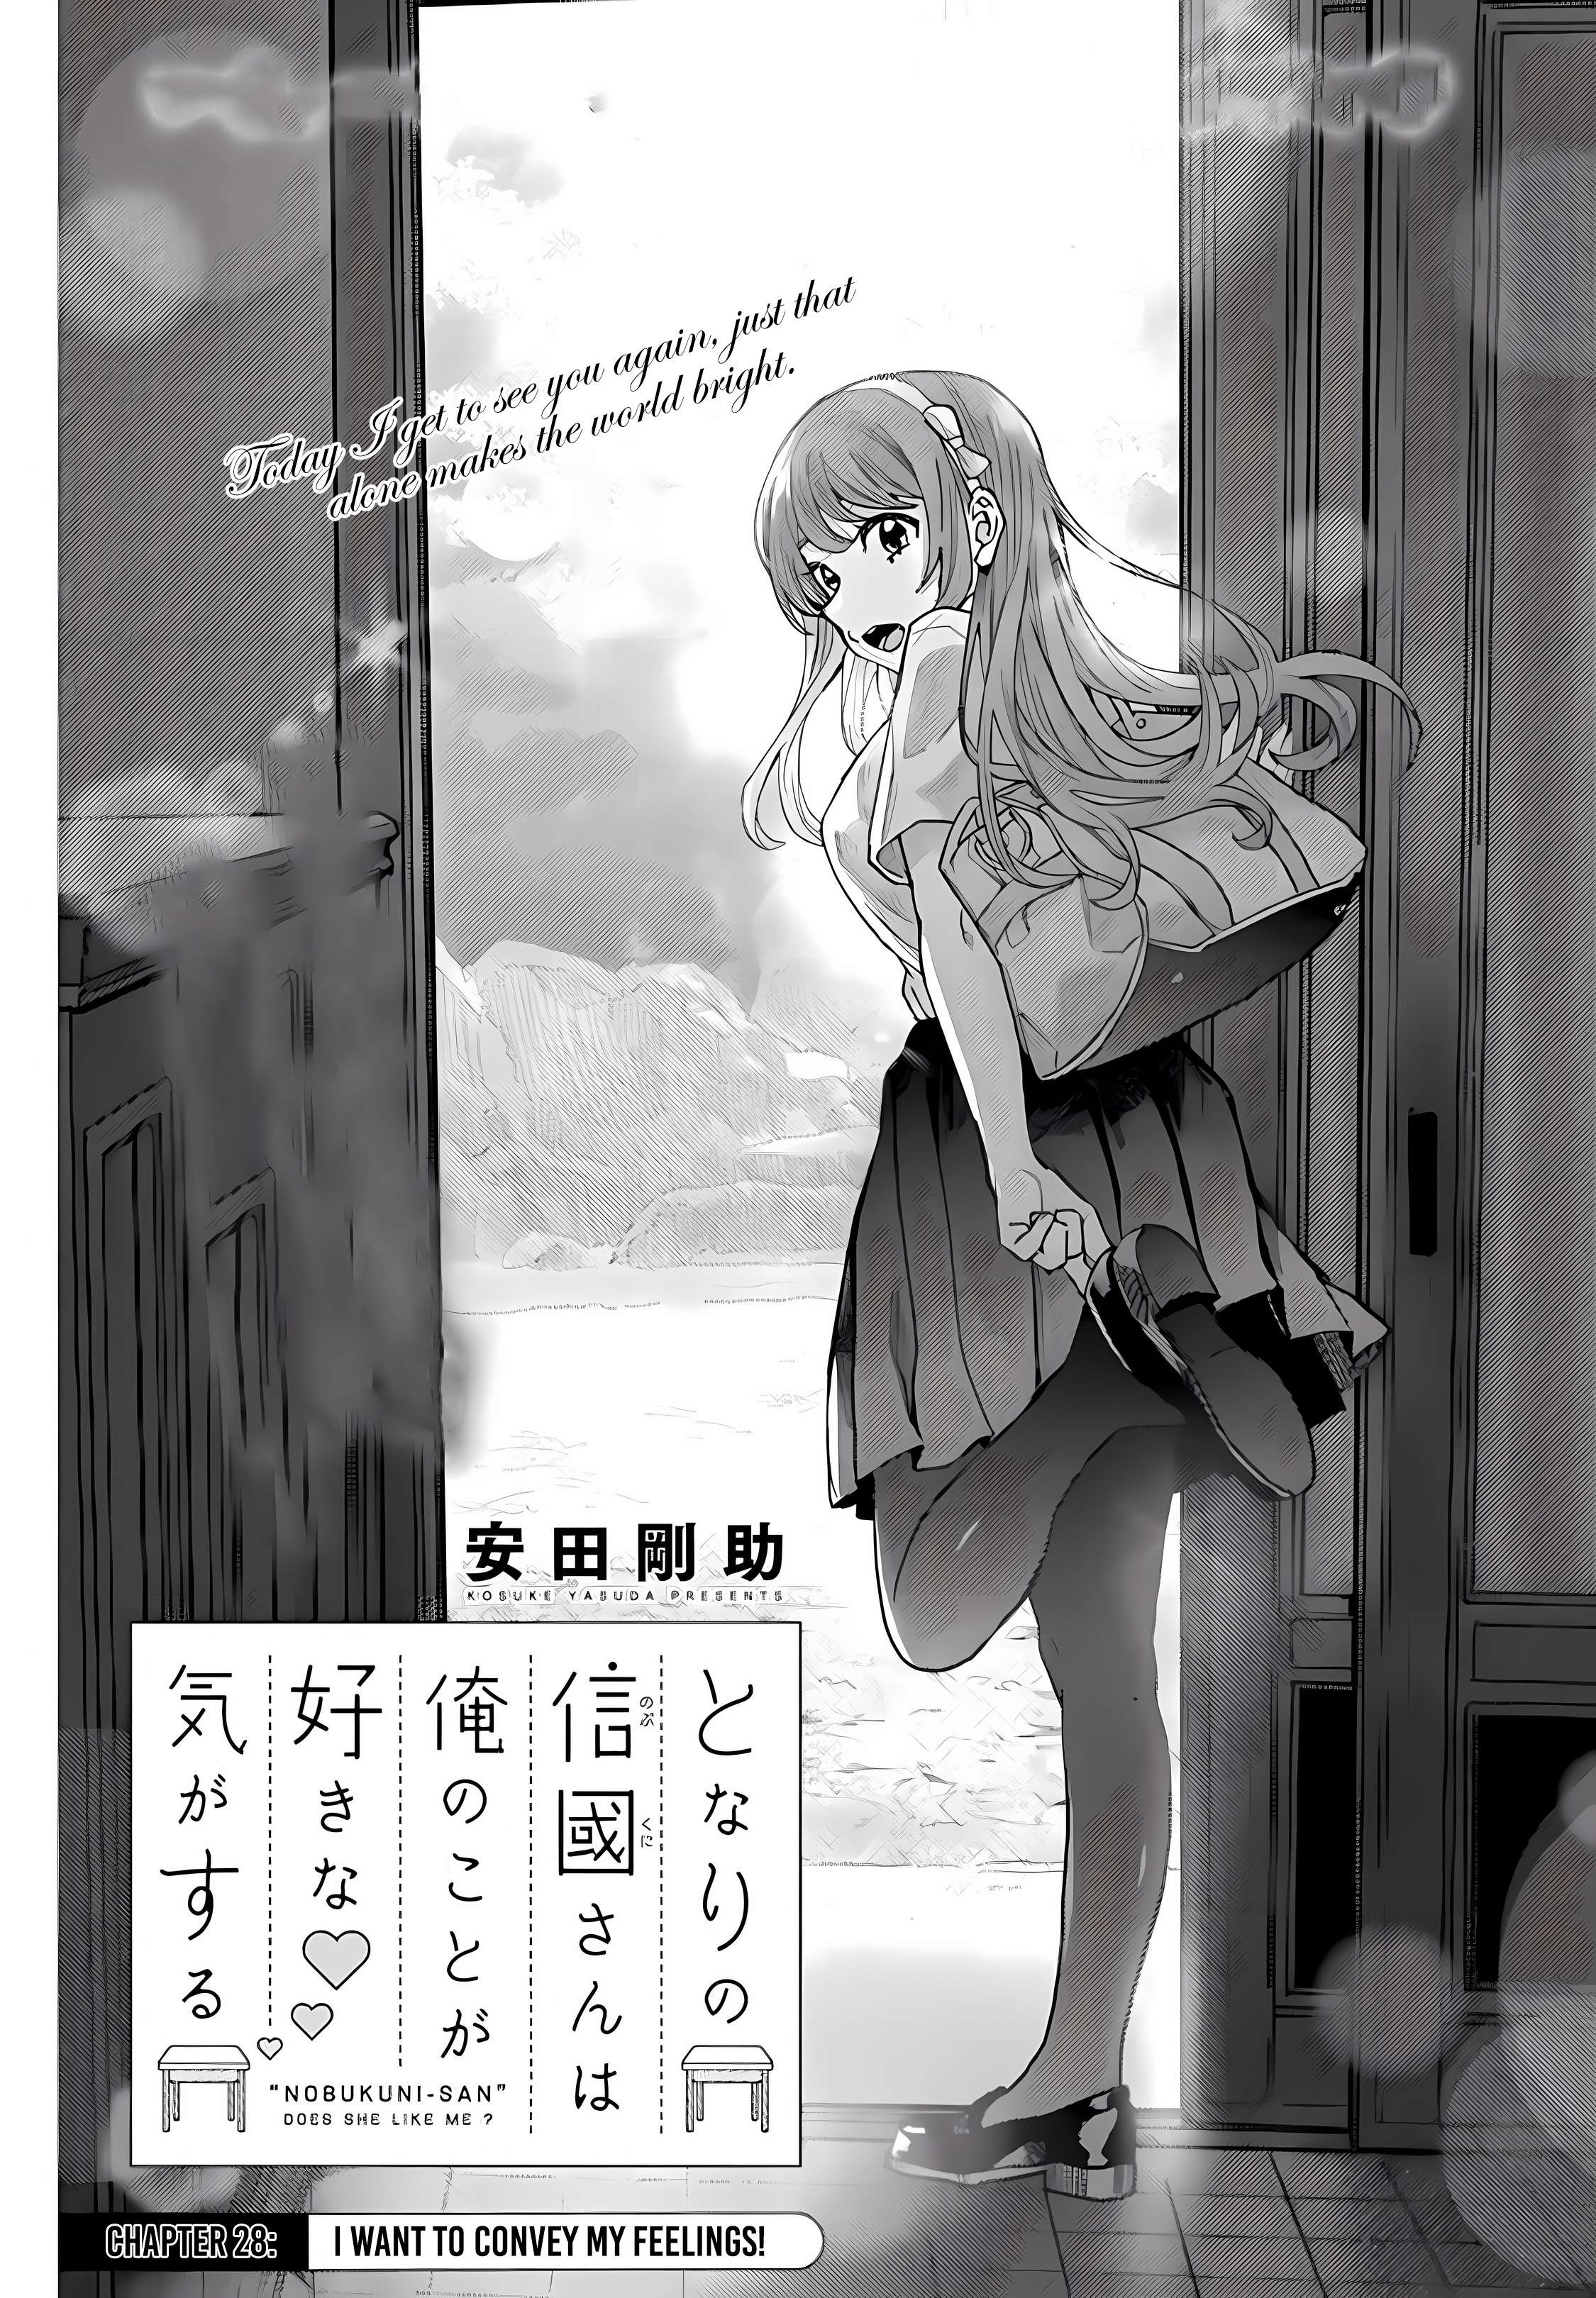 &quot;Nobukuni-san&quot; Does She Like Me? - chapter 28 - #2